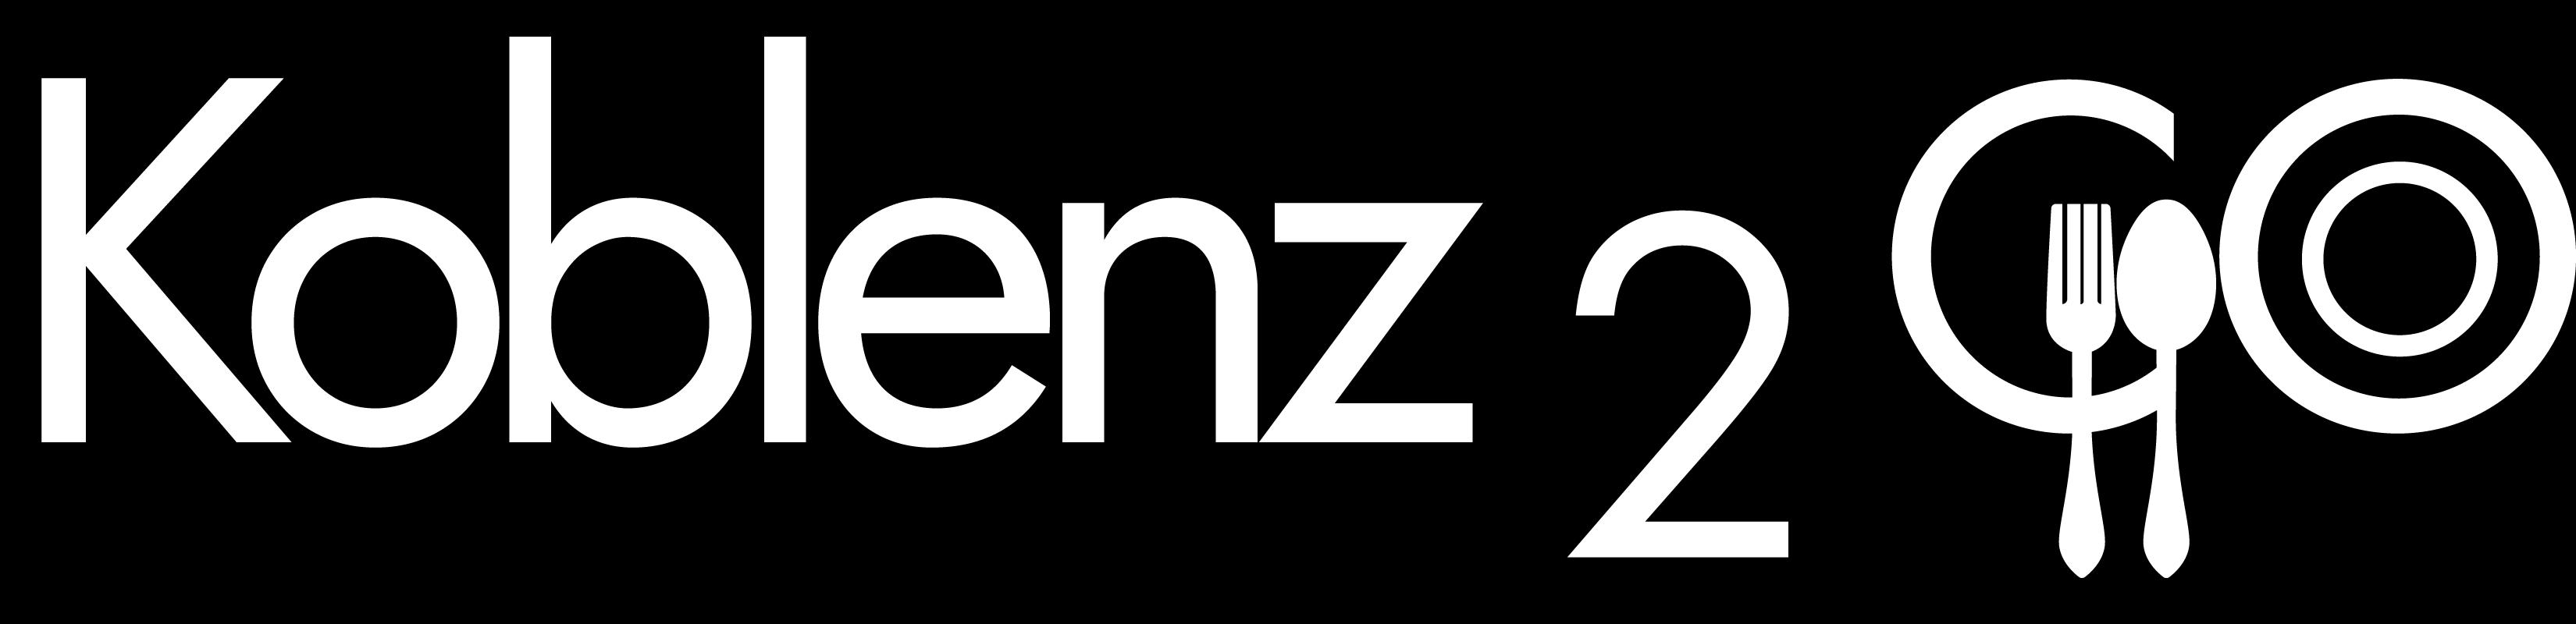 Koblenz2go logo